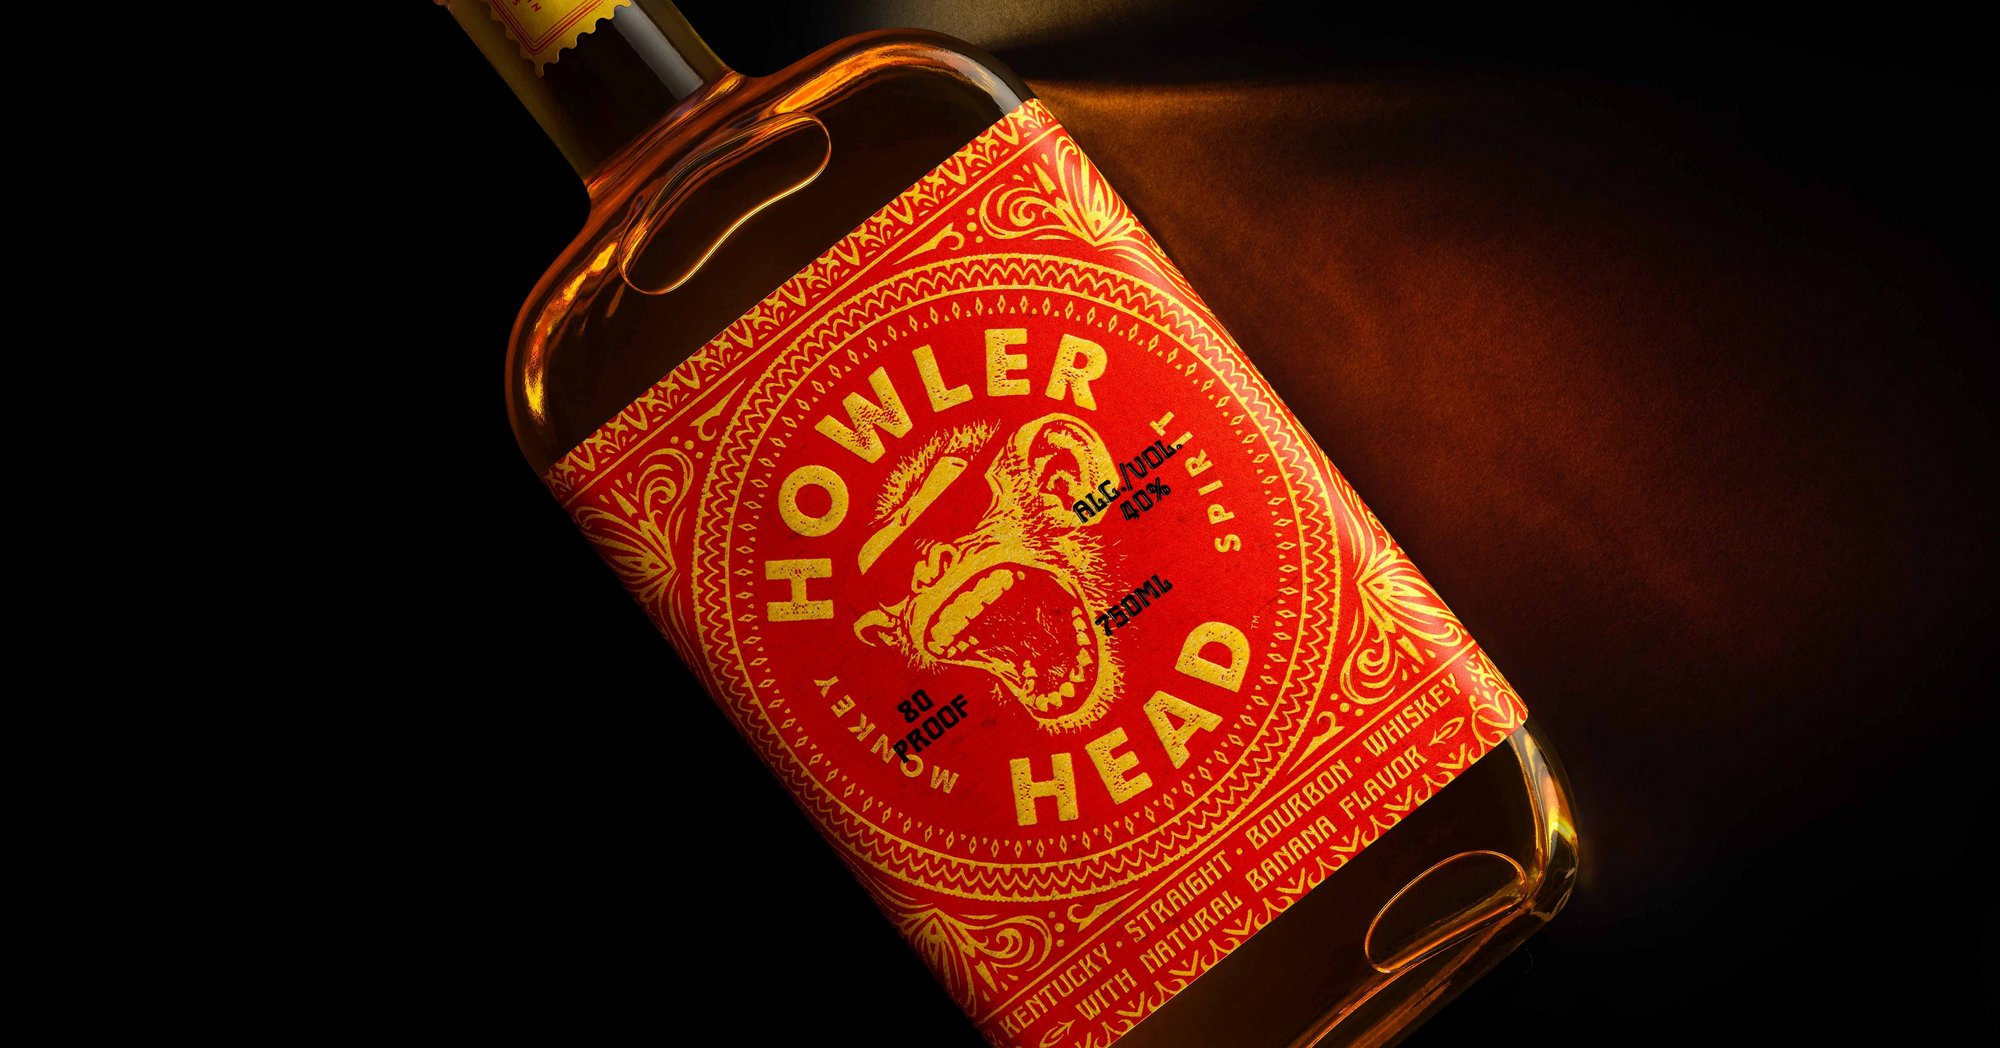 howler head whiskey wikipedia